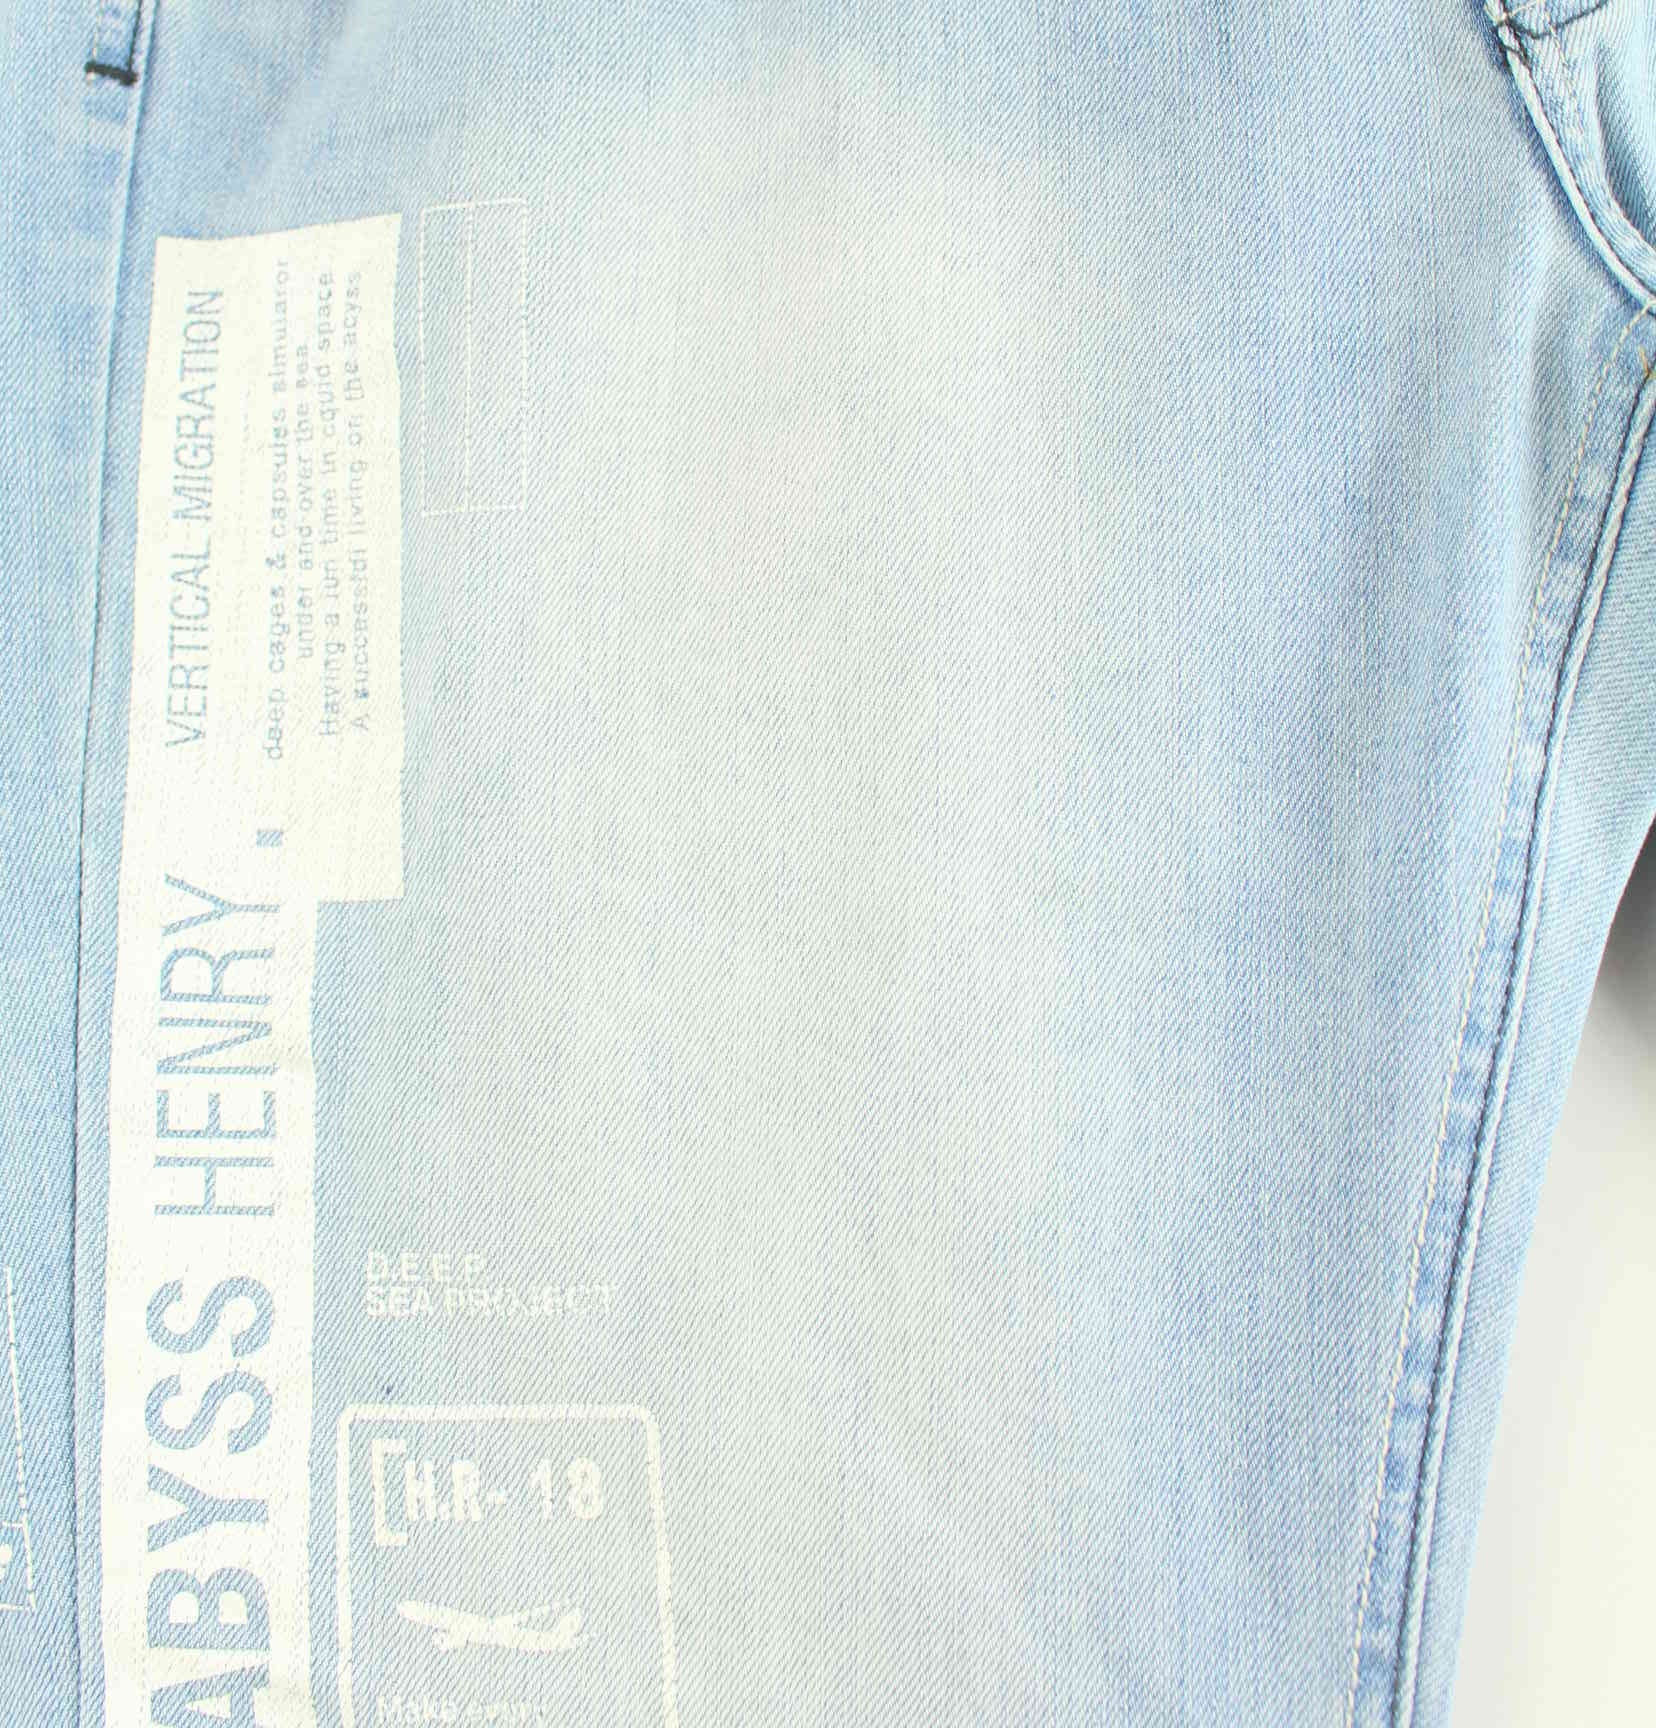 Henry Print Jeans Blau W34 L32 (detail image 1)